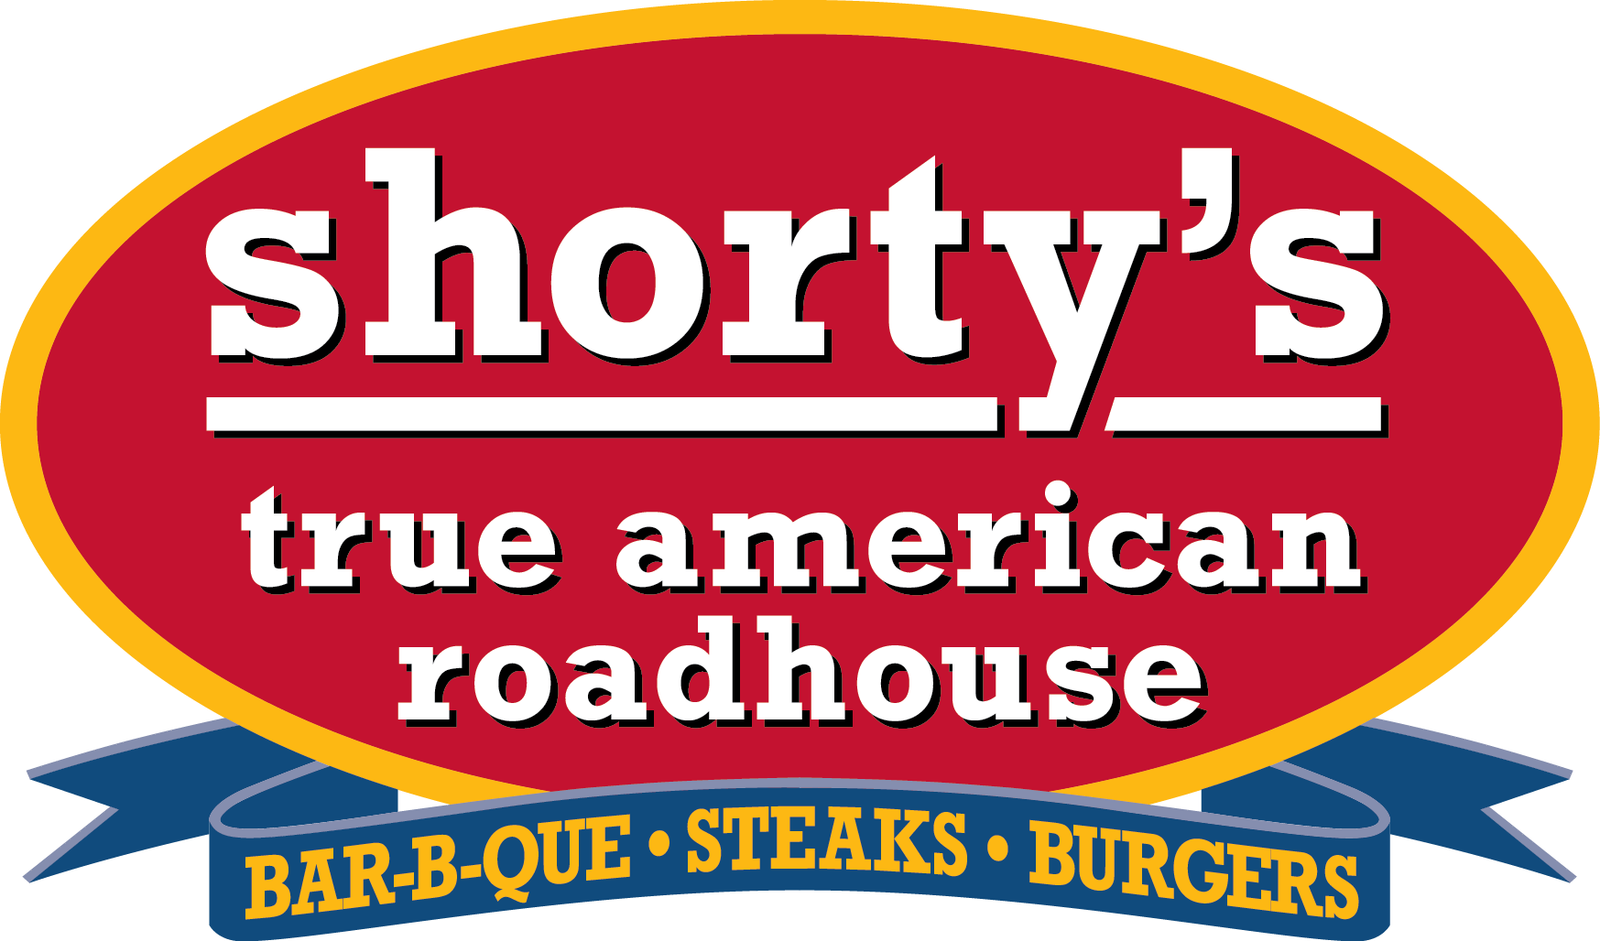 Shorty's True American Roadhouse logo.